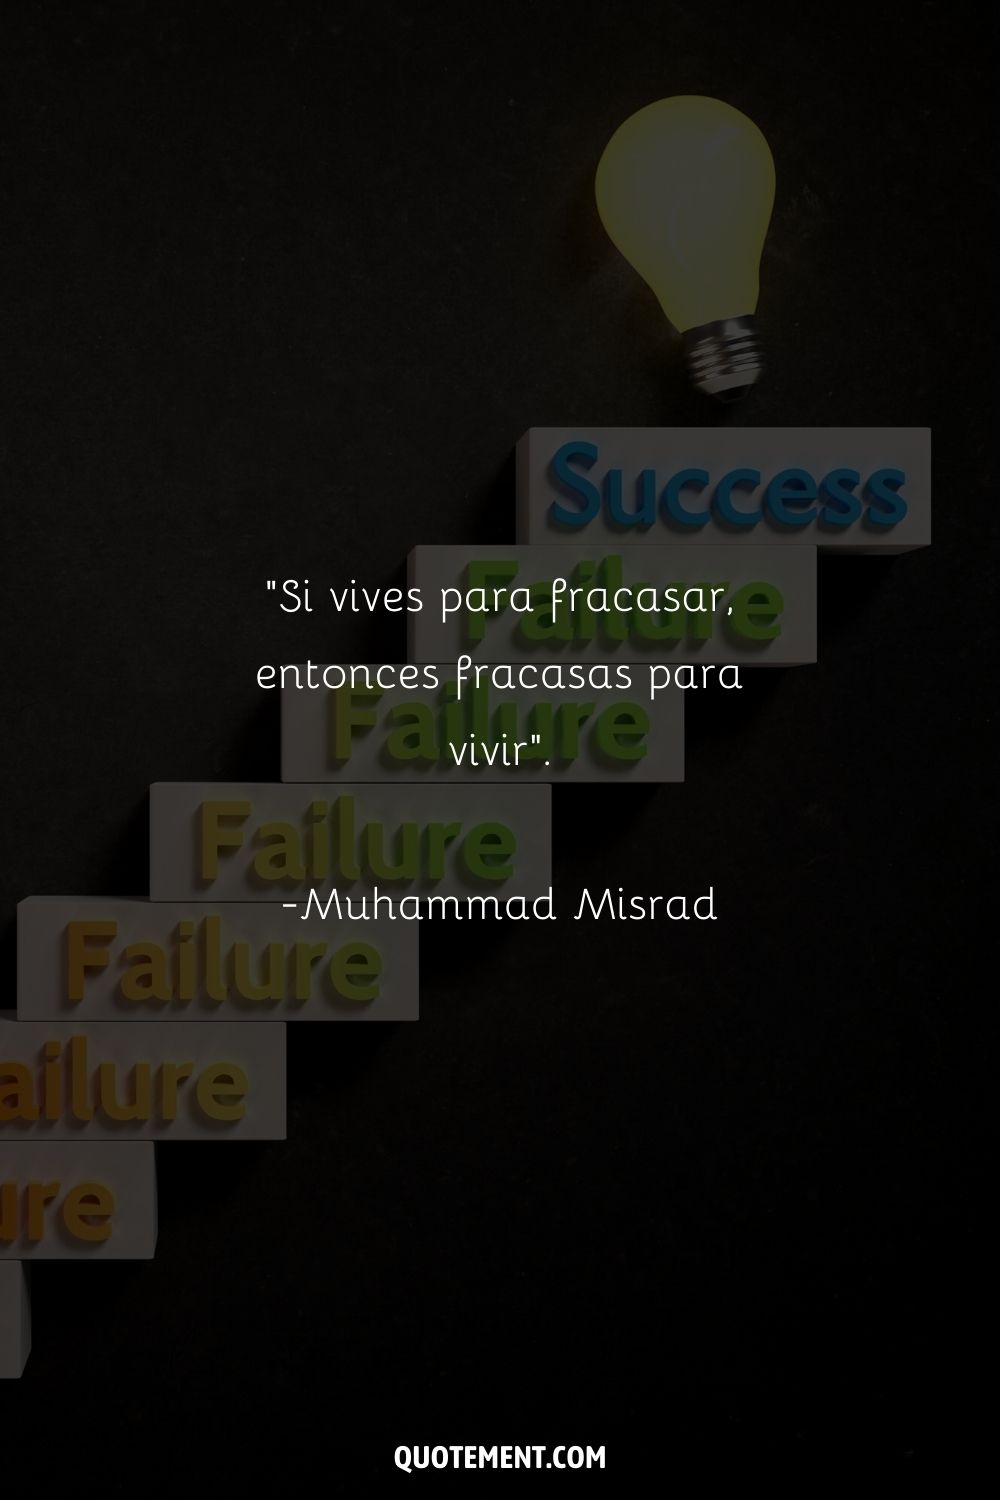 "Si vives para fracasar, fracasas para vivir". - Muhammad Misrad